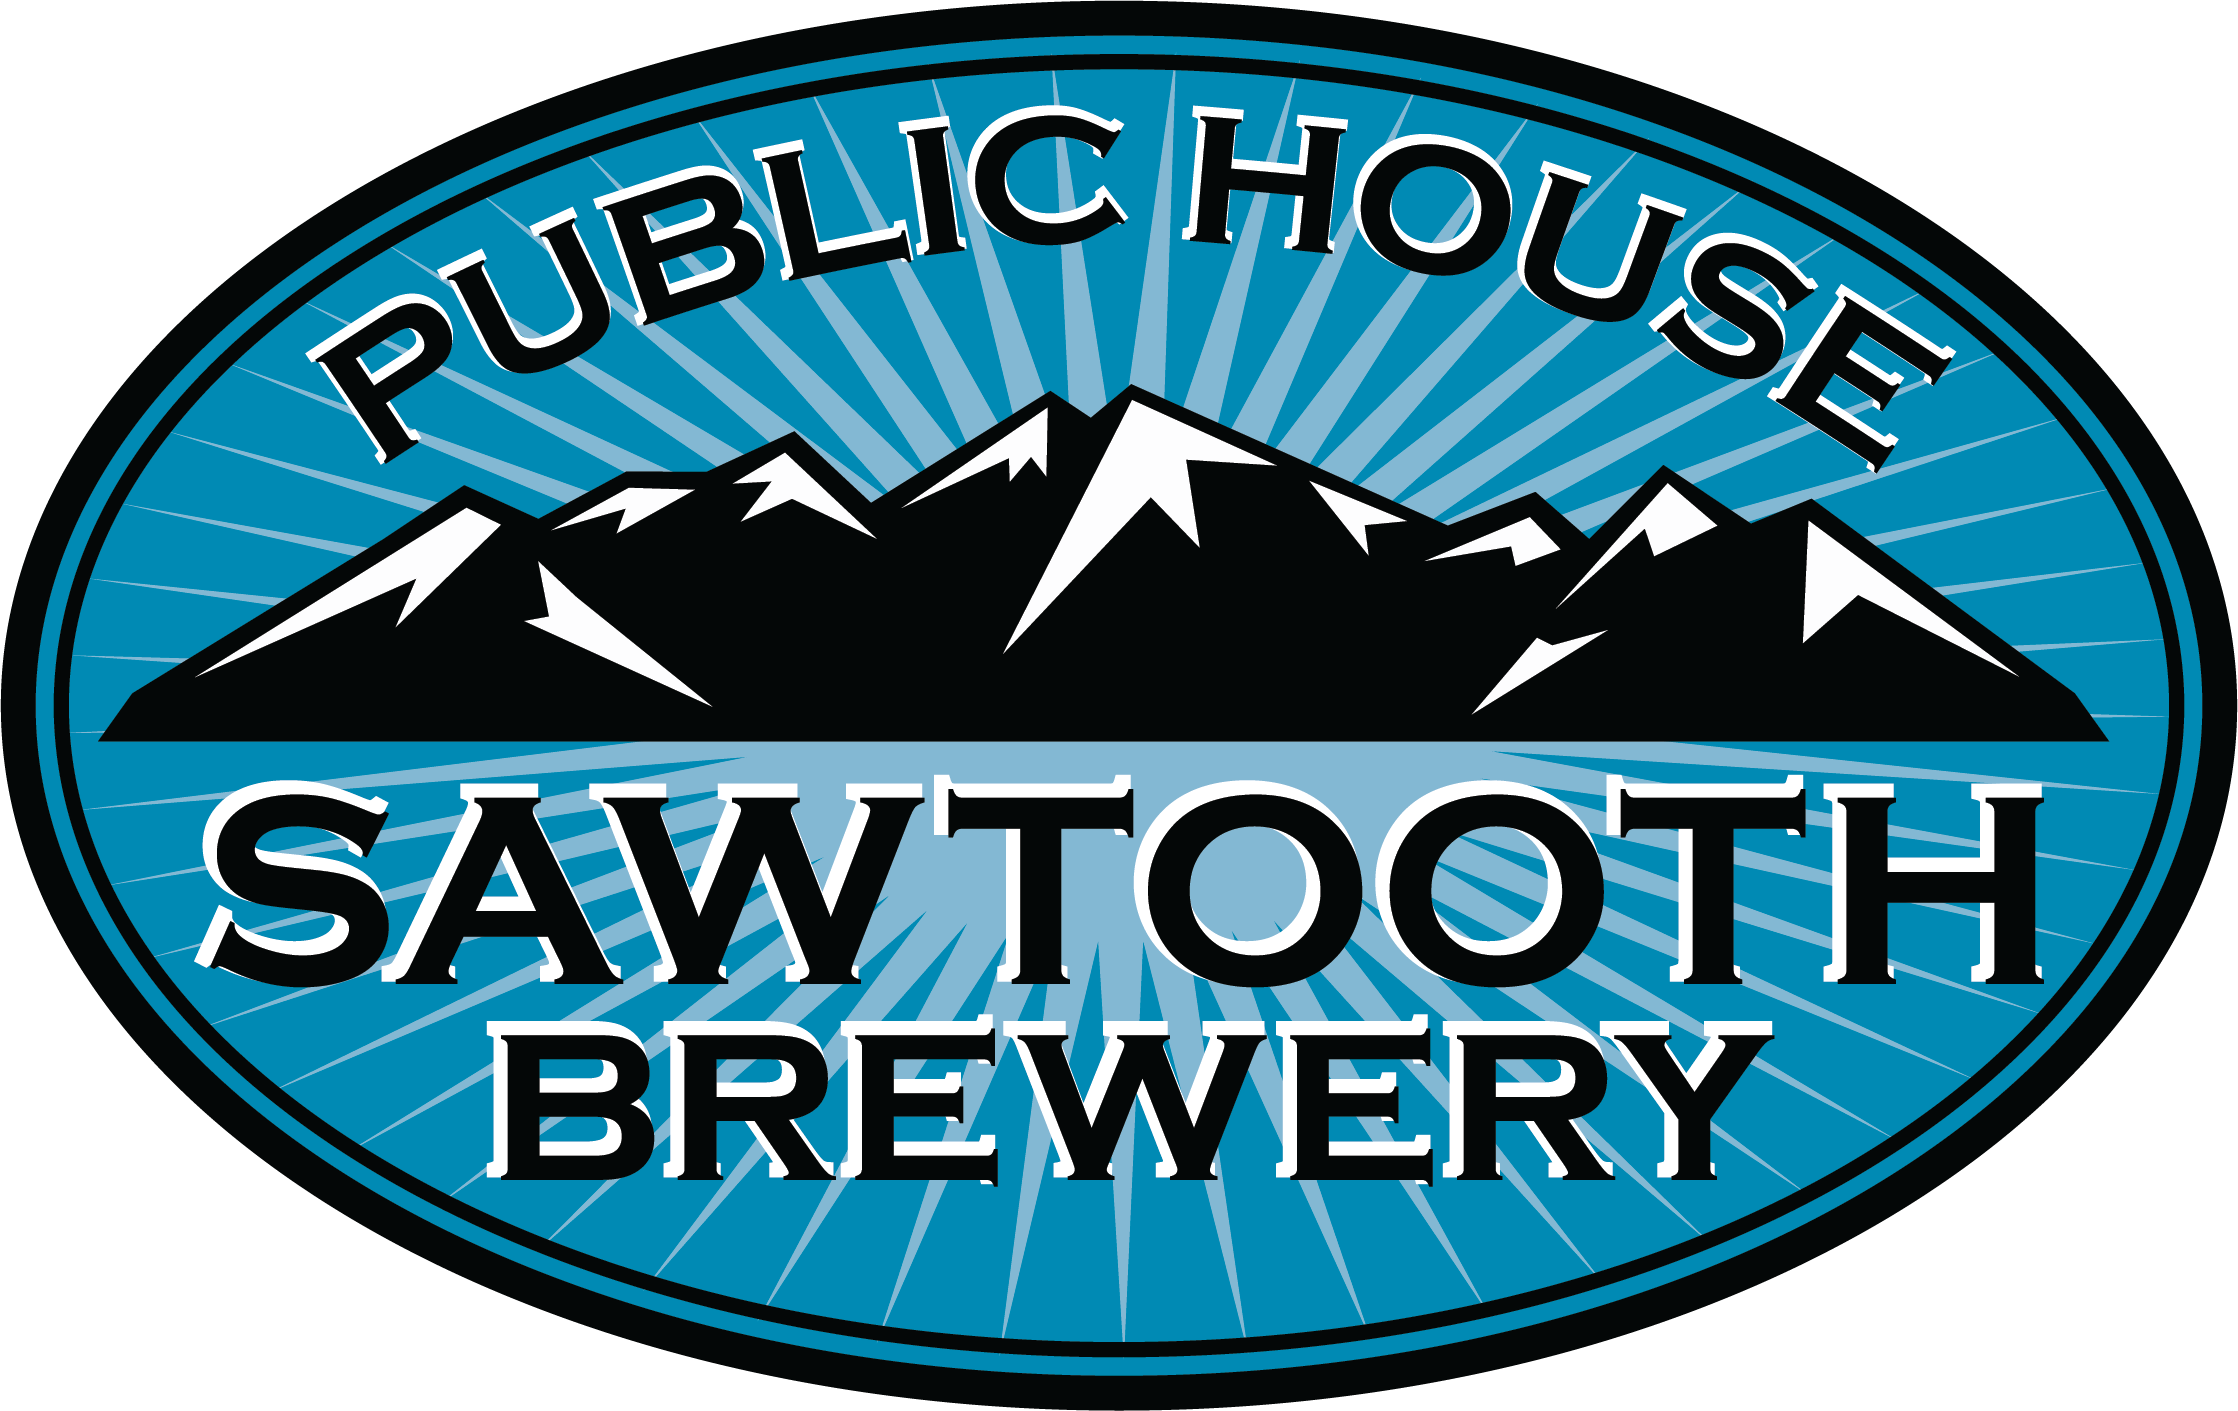 Sawtooth Brewery Ketchum Public House